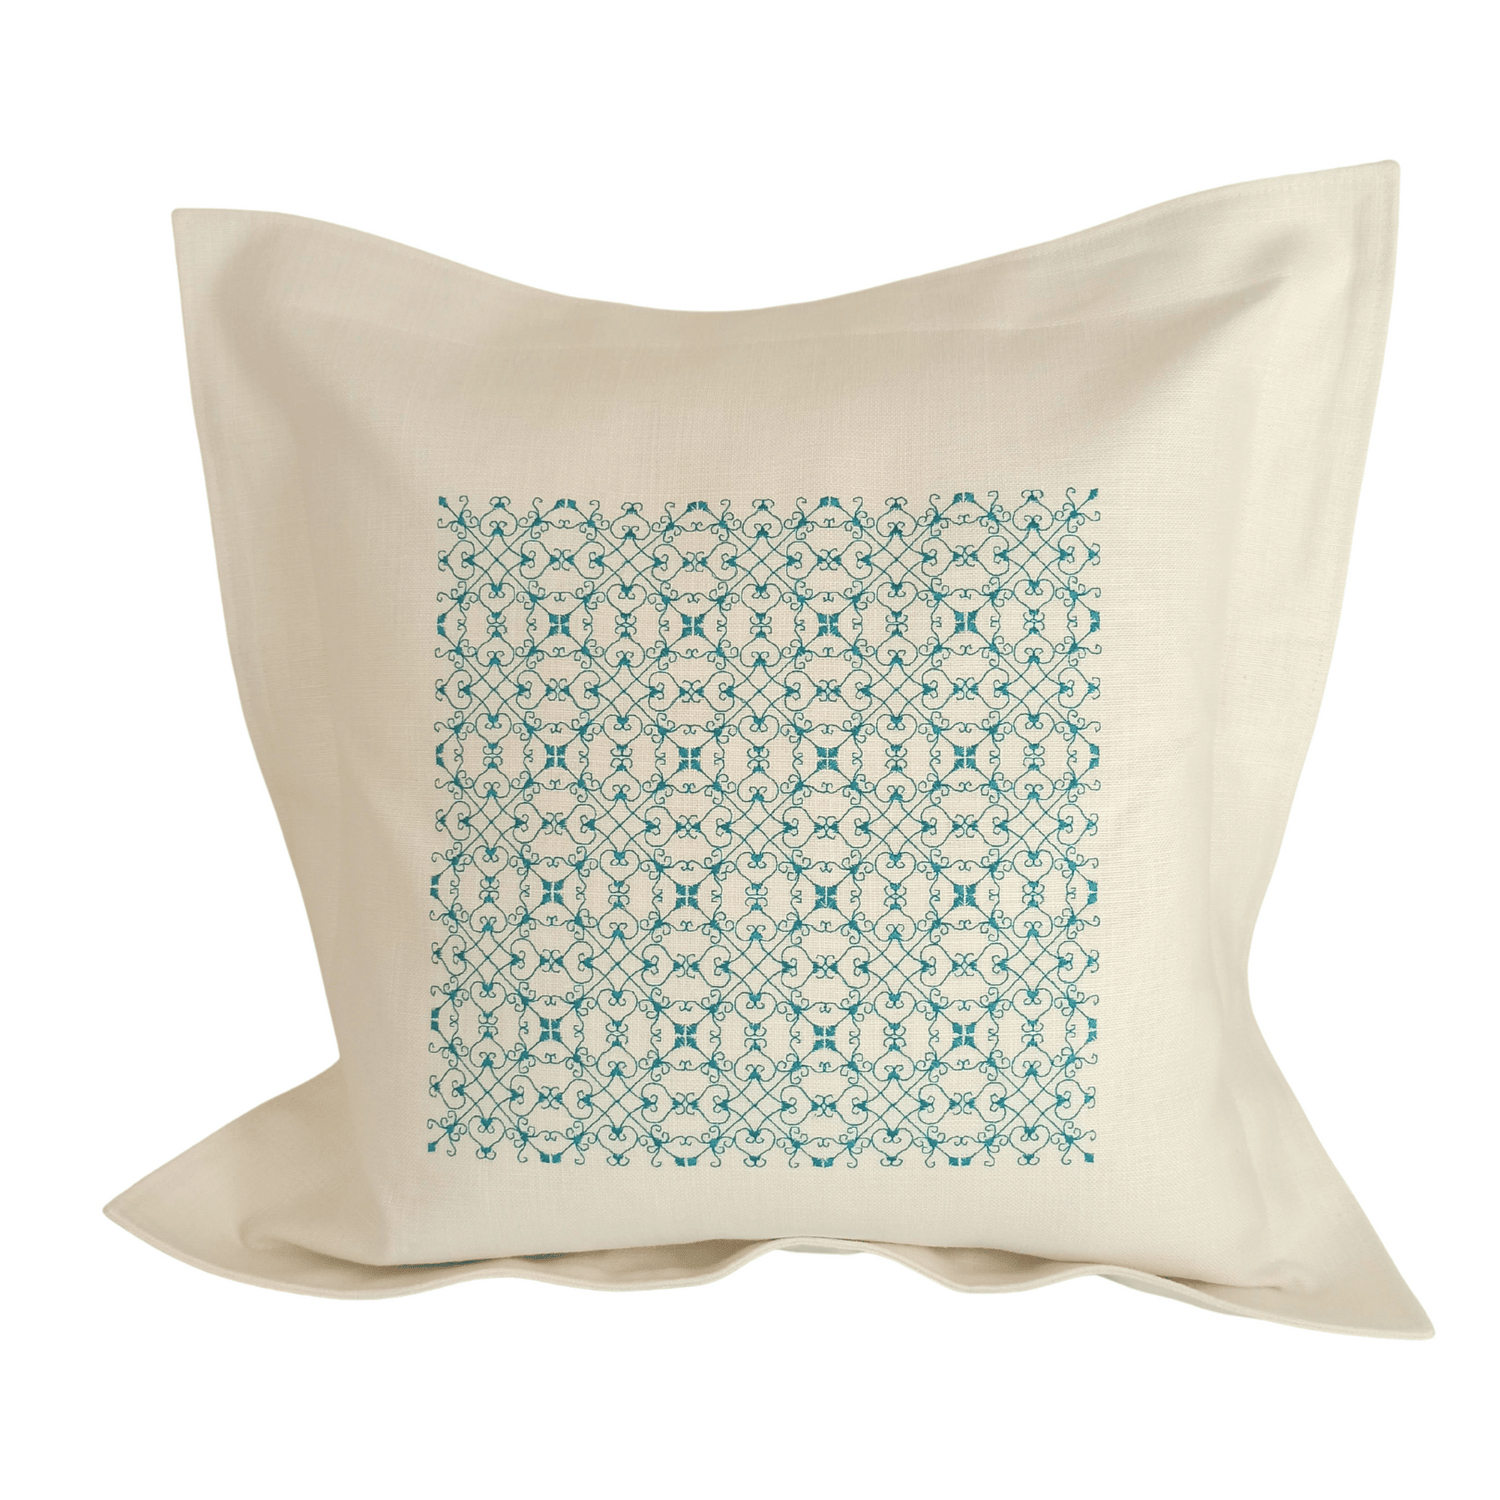 Linen Cushion Cover Portuguese Lace - Turquoise - Front Image